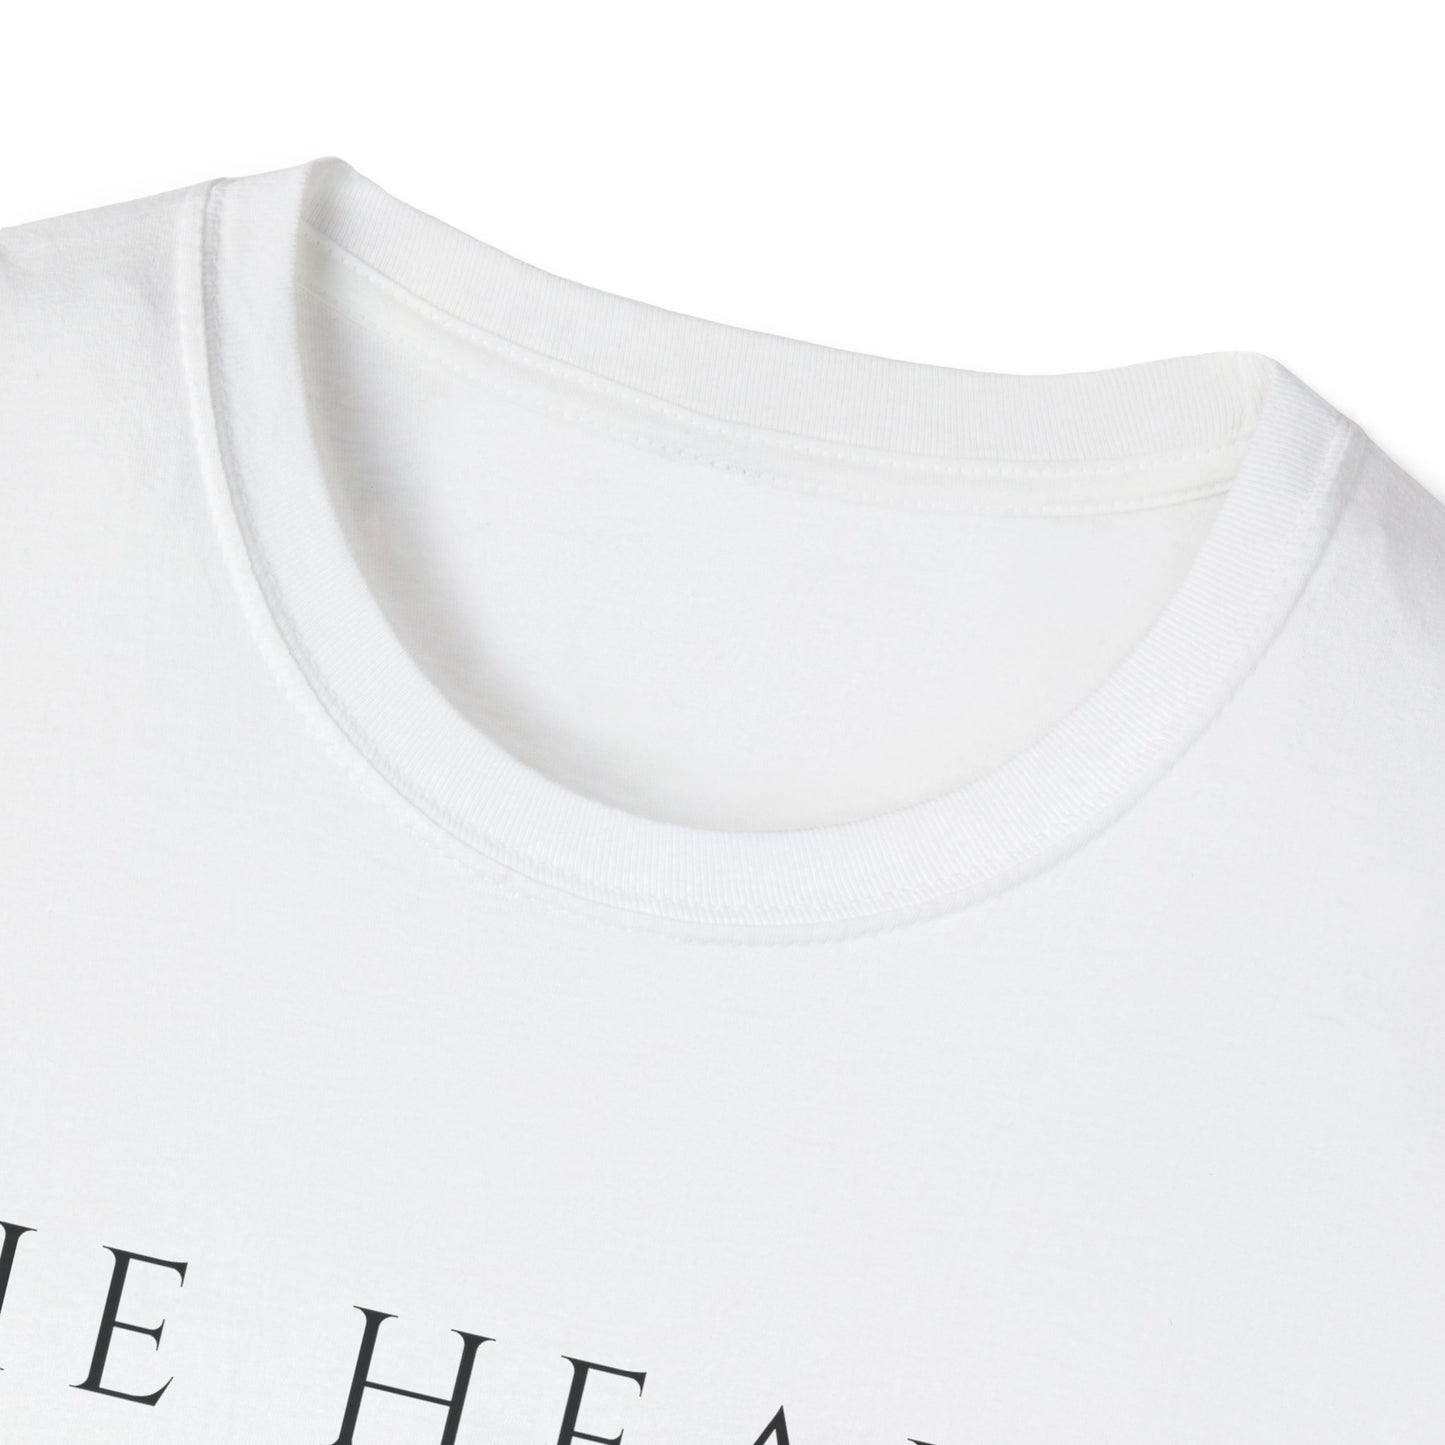 The Healer: Soft Style T-shirt